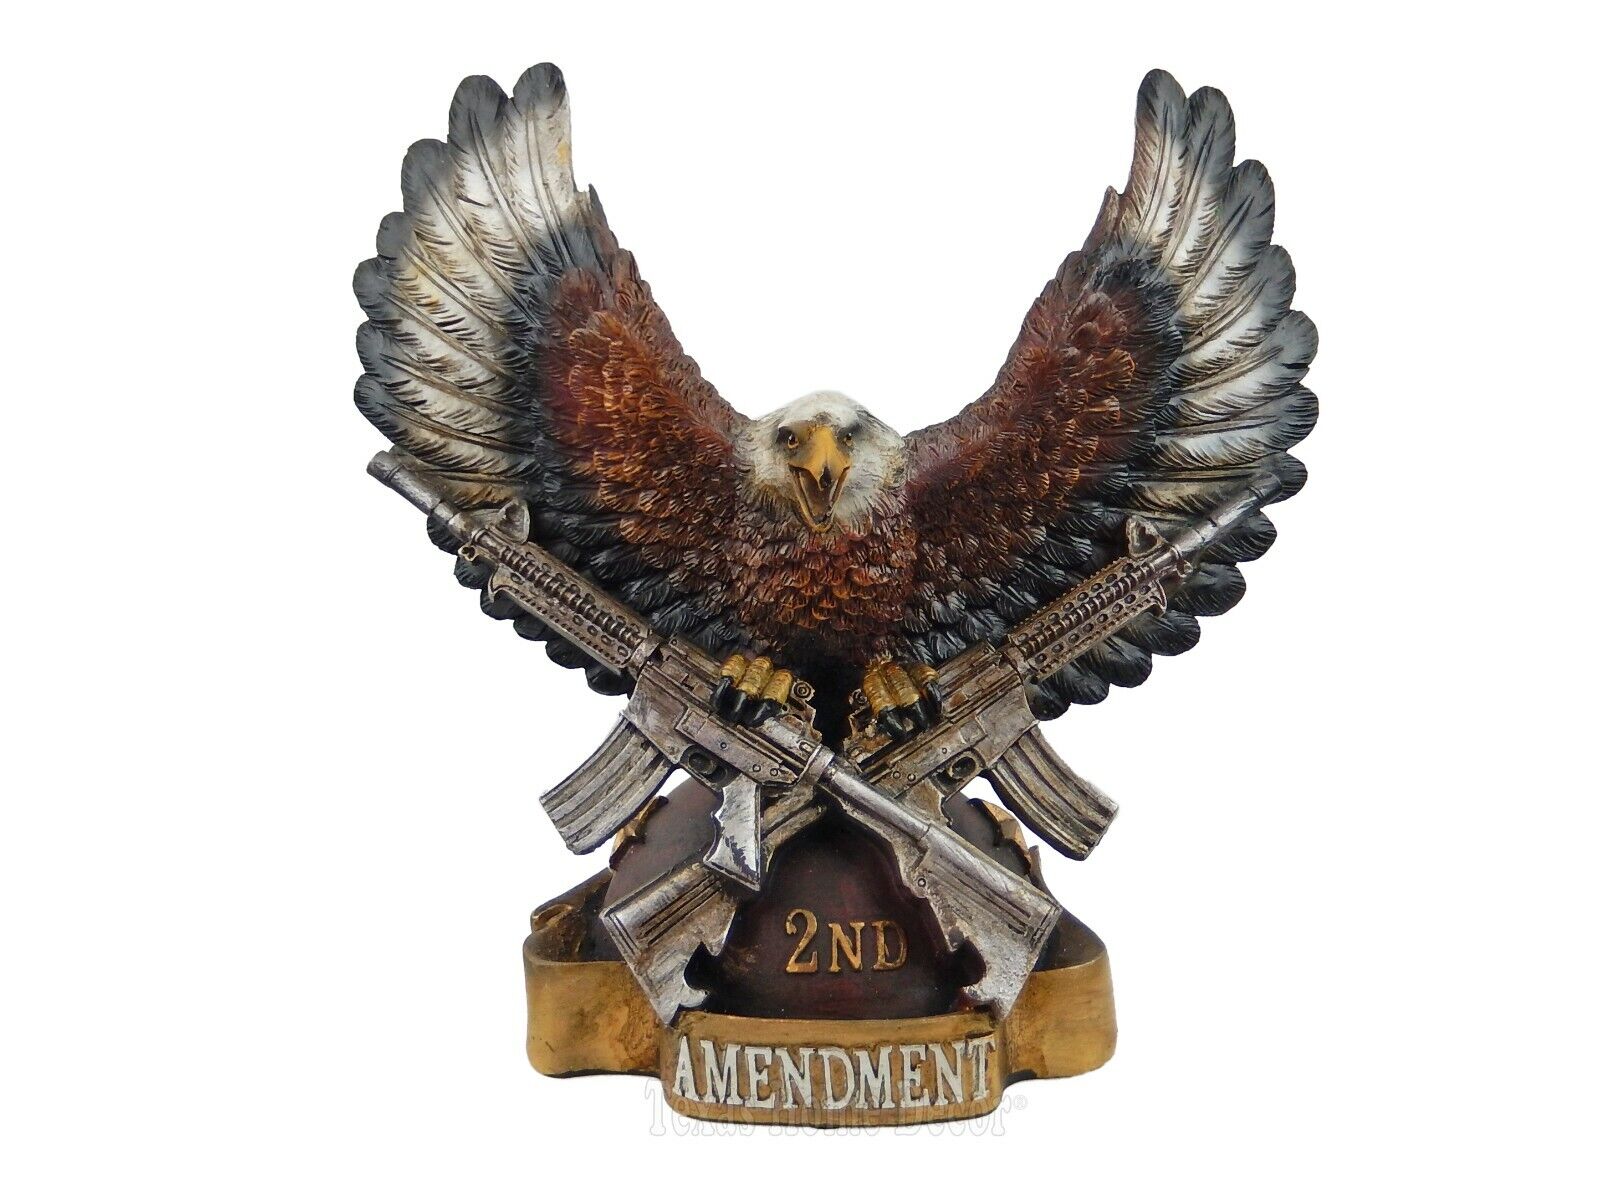 Second Amendment Bald American Eagle Statue Figurine Crossed Guns Rifle 9 1/4 in